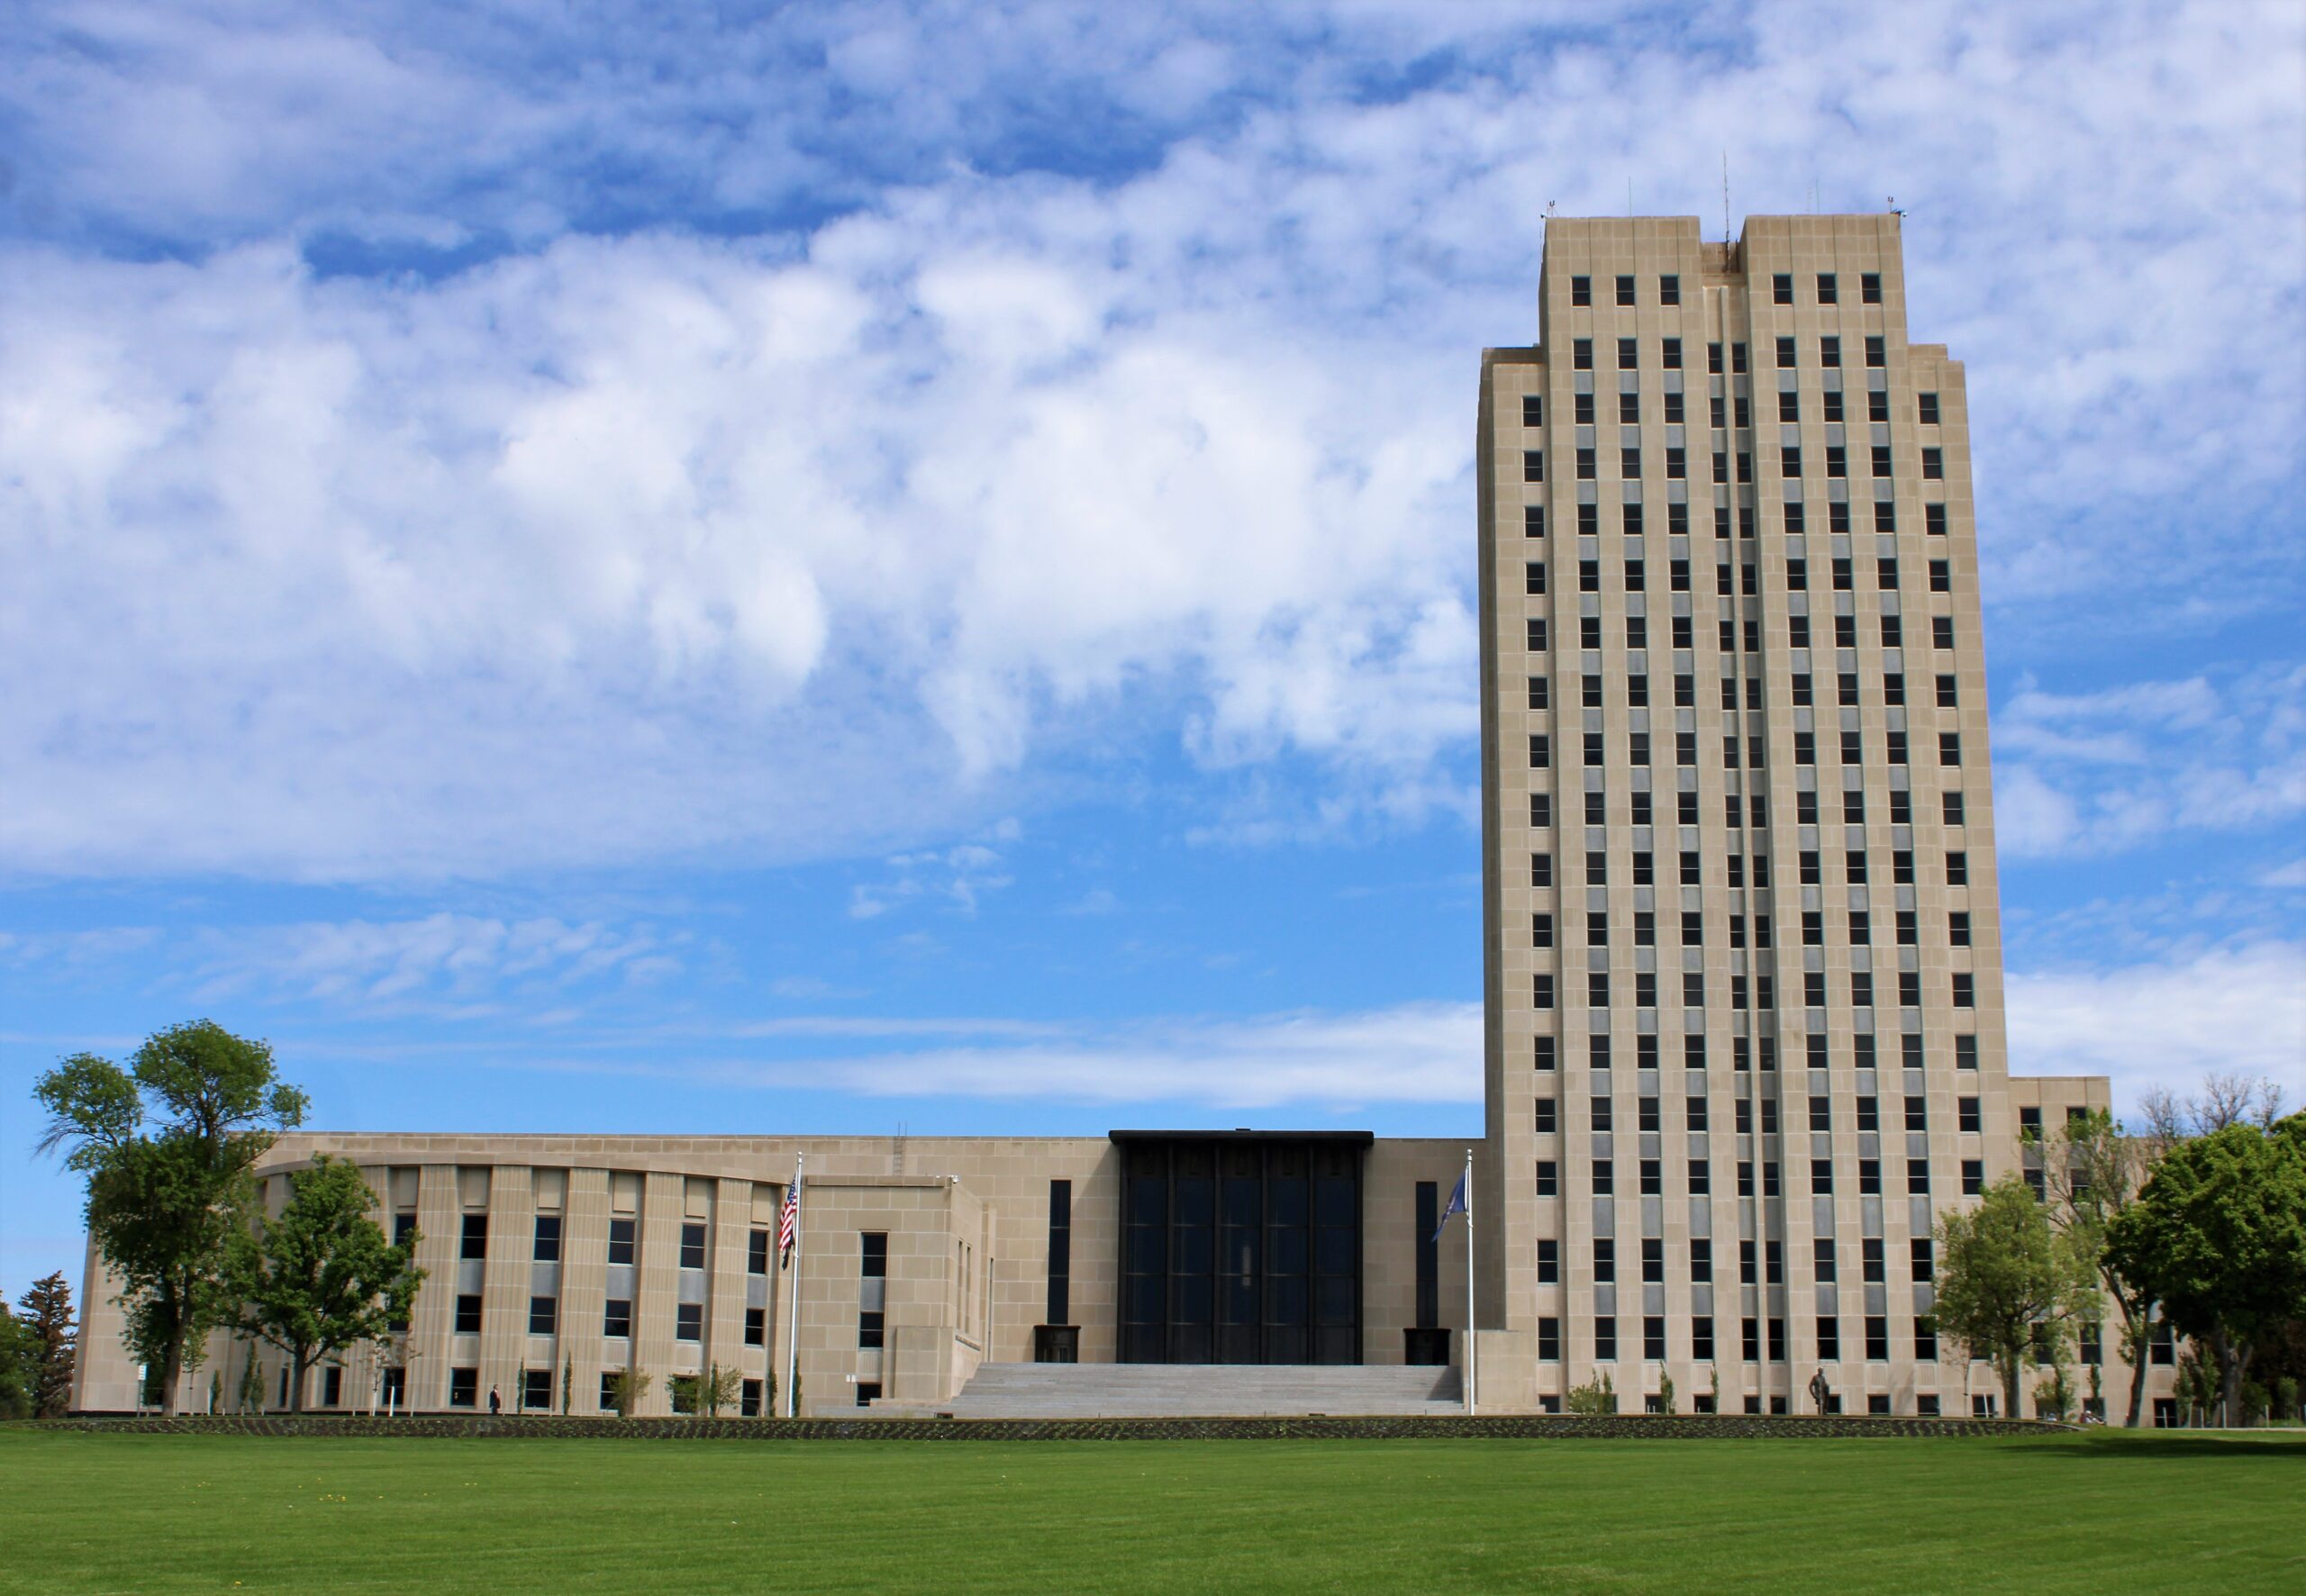 The North Dakota state capitol building in Bismarck, North Dakota.